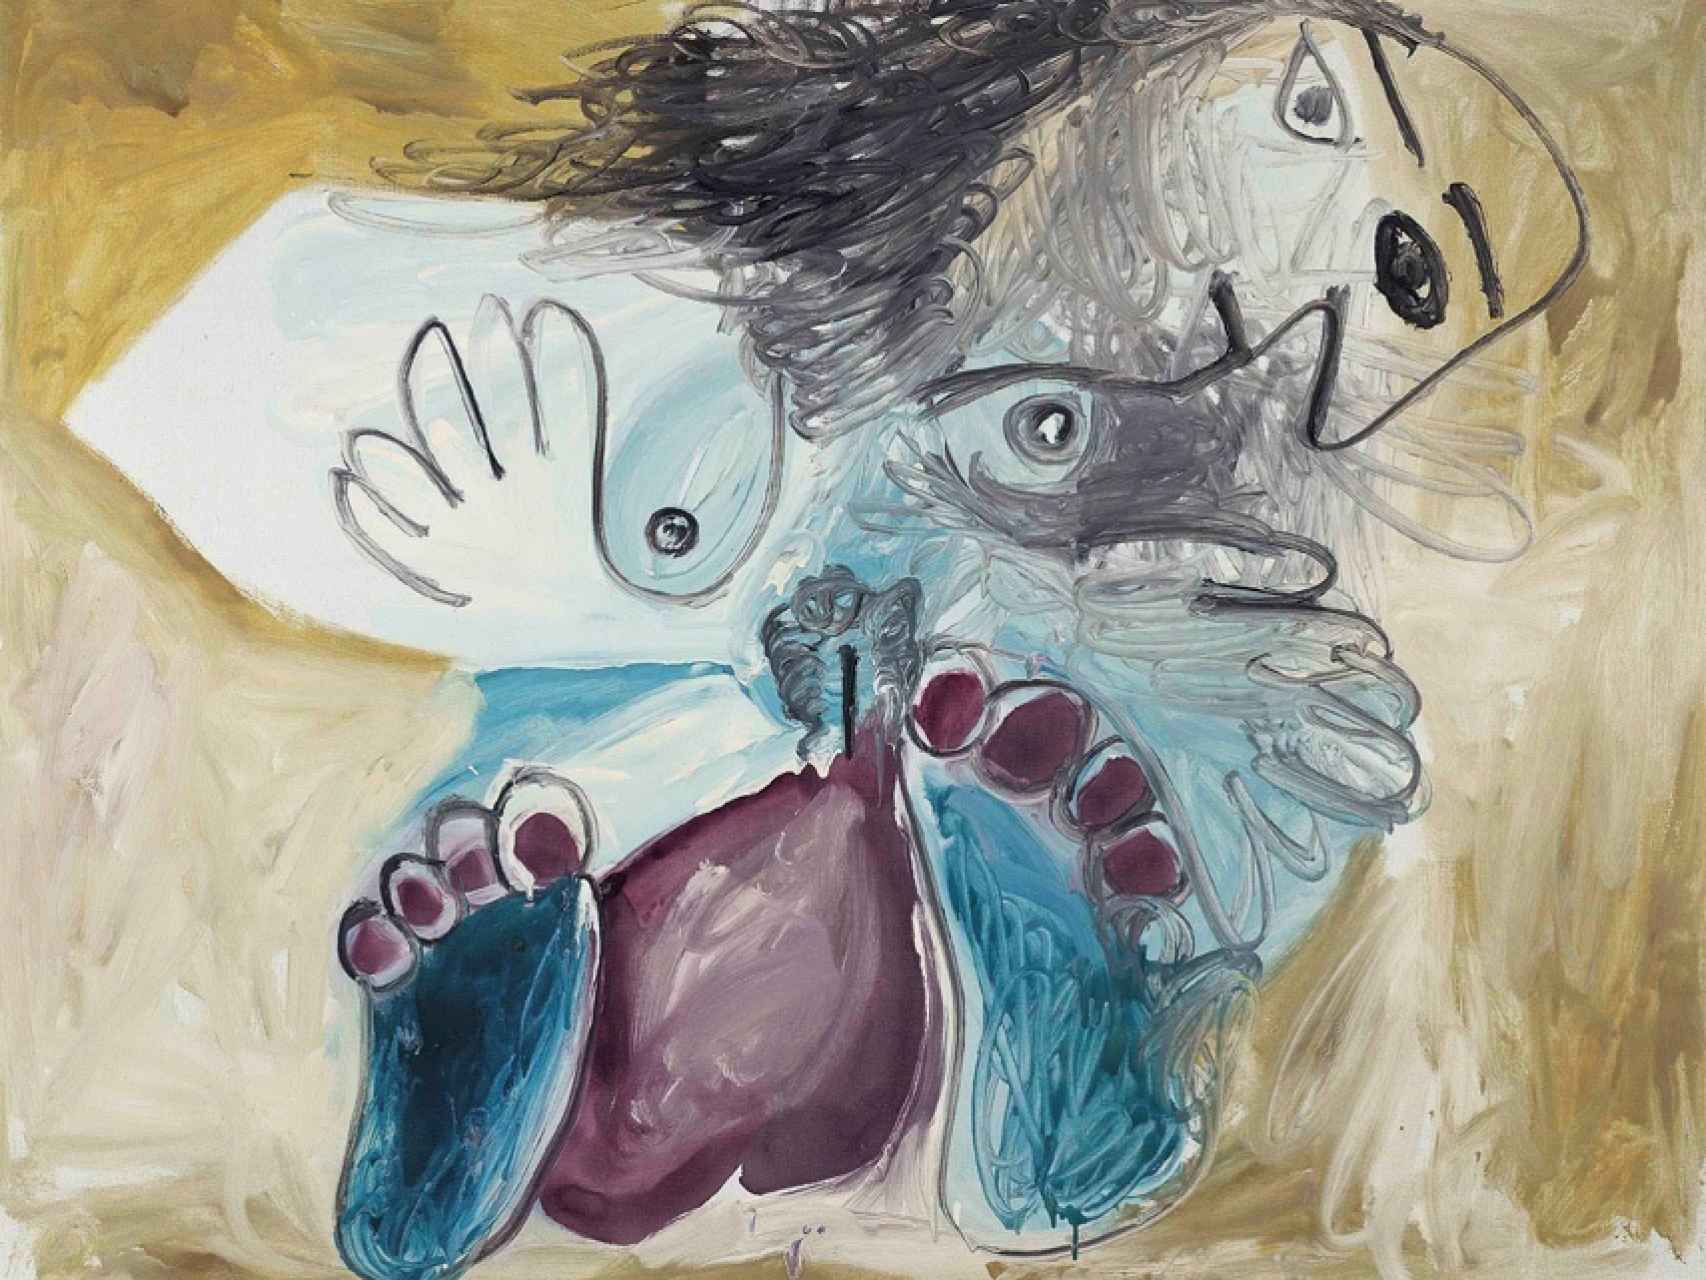 Pablo Picasso pintó Desnudo acostado, en 1967.